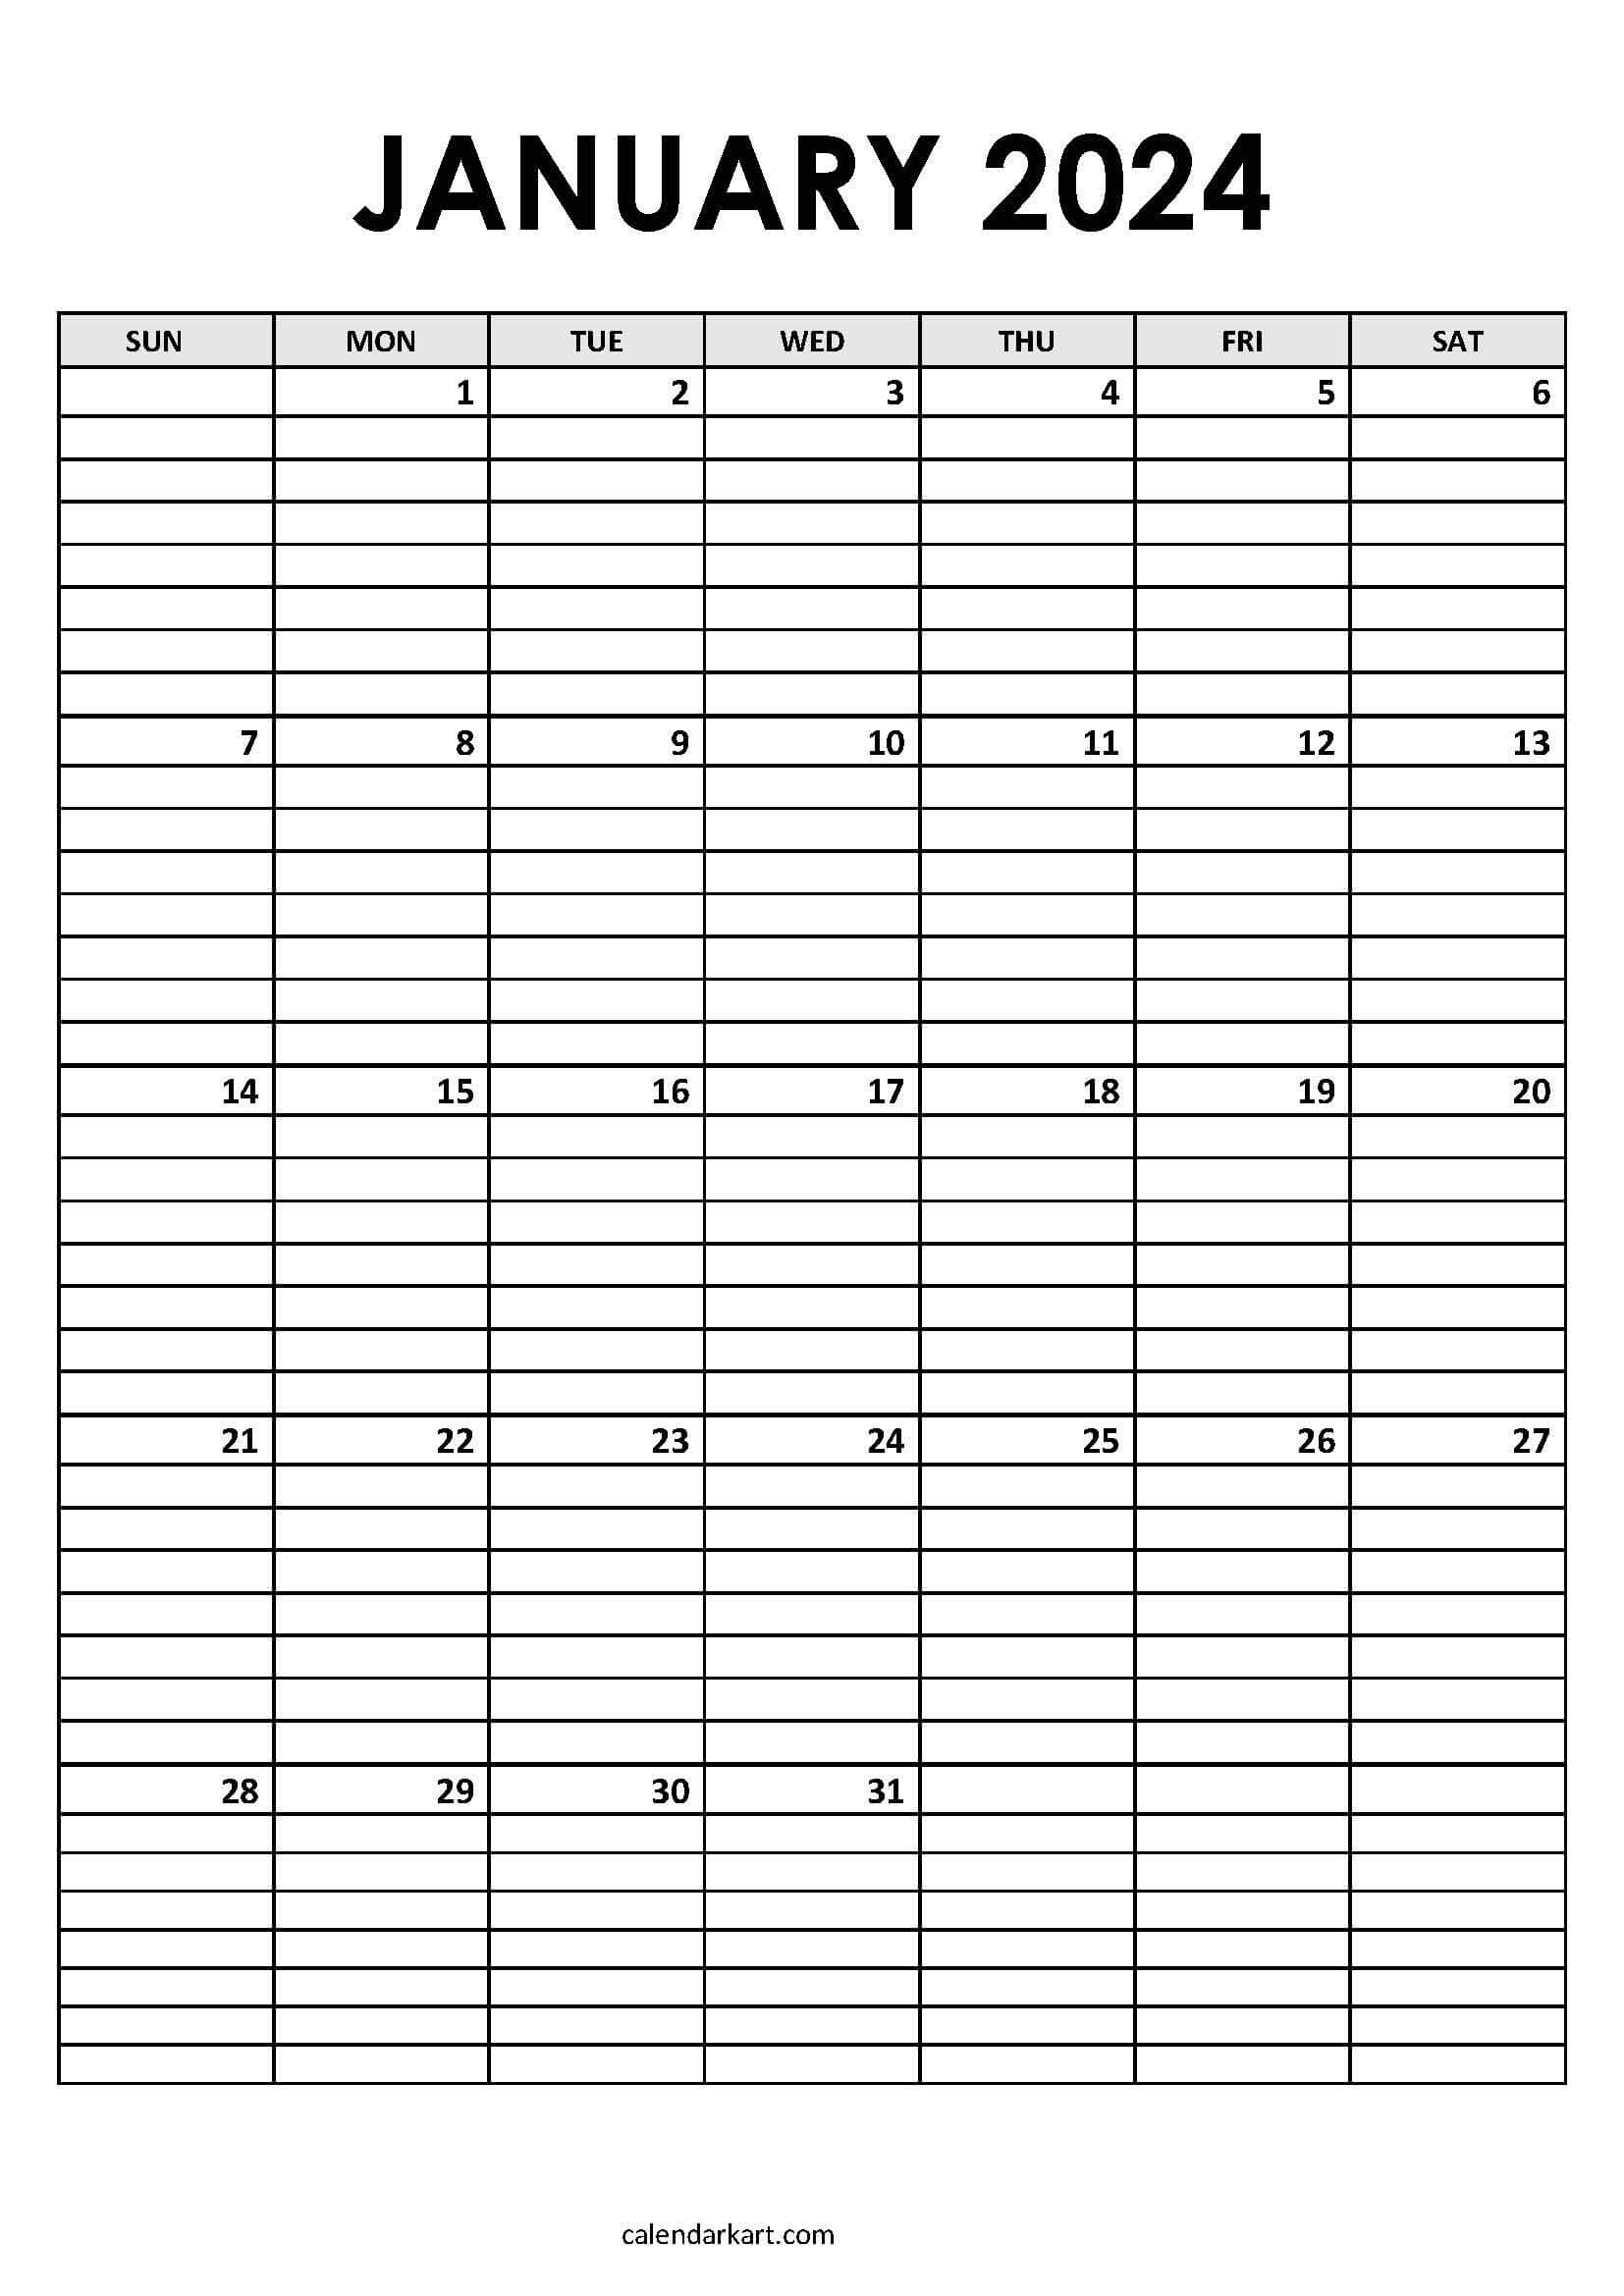 Free Printable January 2024 Calendars - Calendarkart | Free Printable Calendar 2024 Monthly With Lines